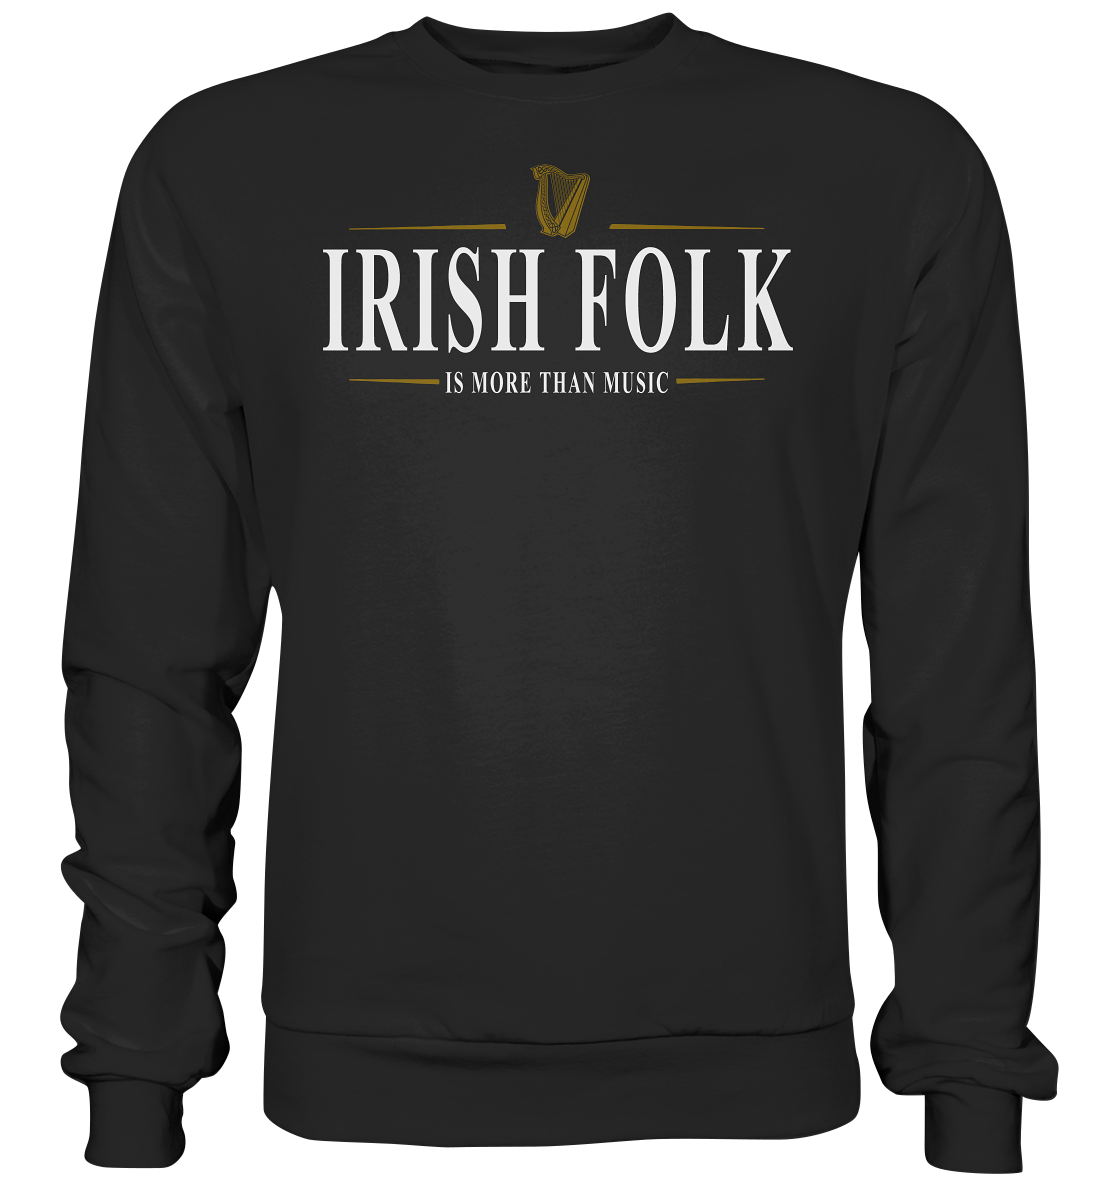 Irish Folk "Is More Than Music" - Premium Sweatshirt